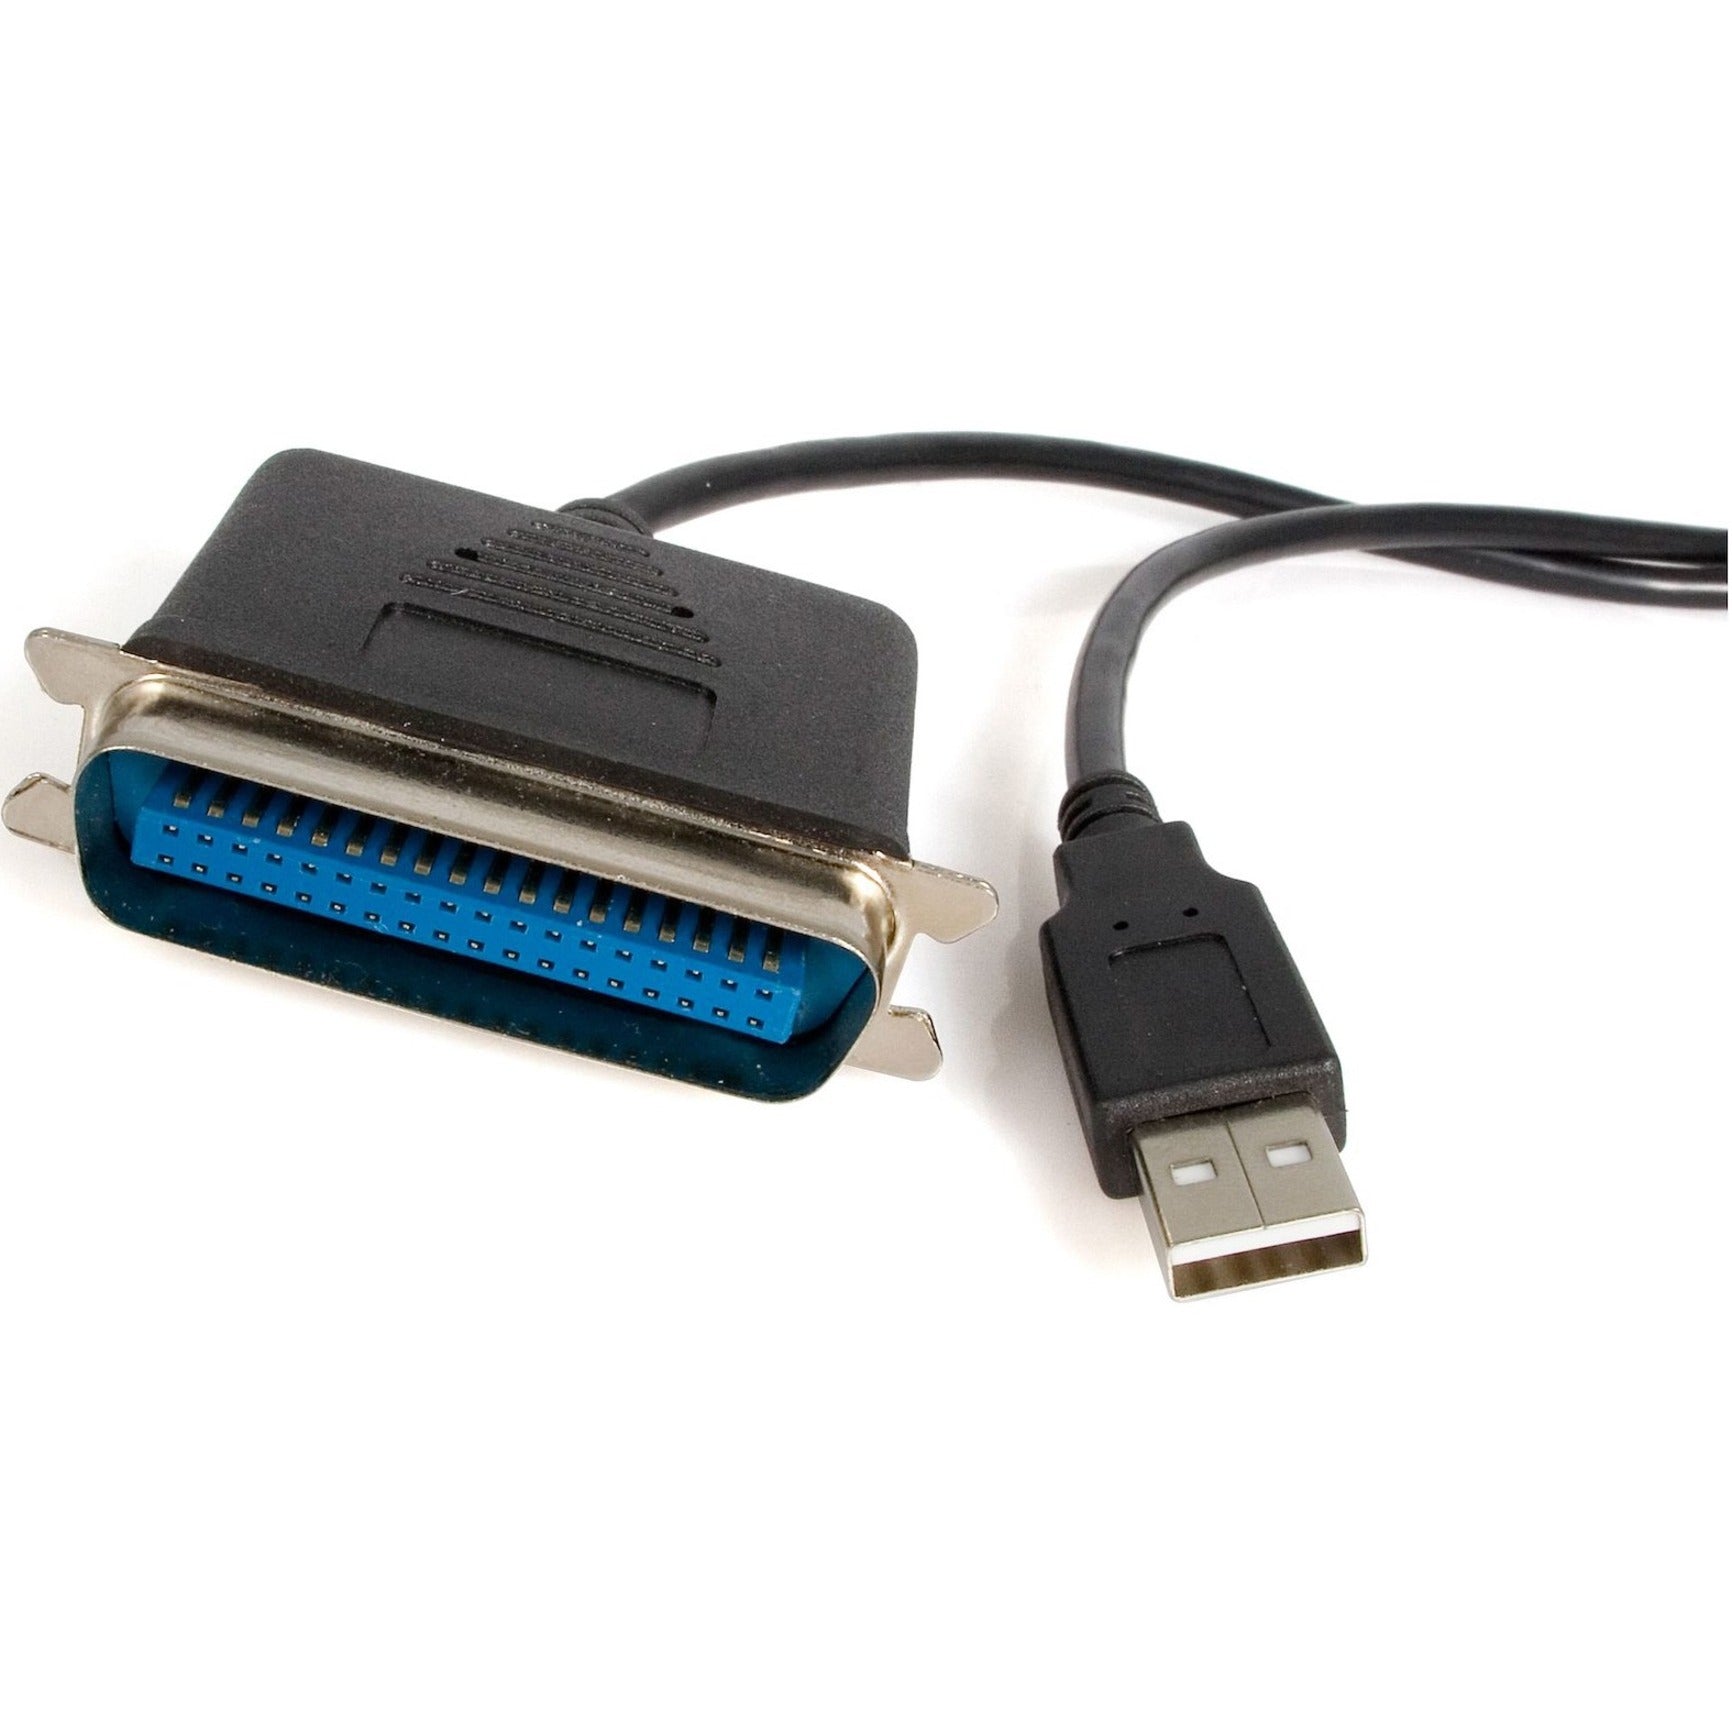 StarTech.com ICUSB1284 Parallel Printer Adapter - USB - 6 ft, Plug & Play